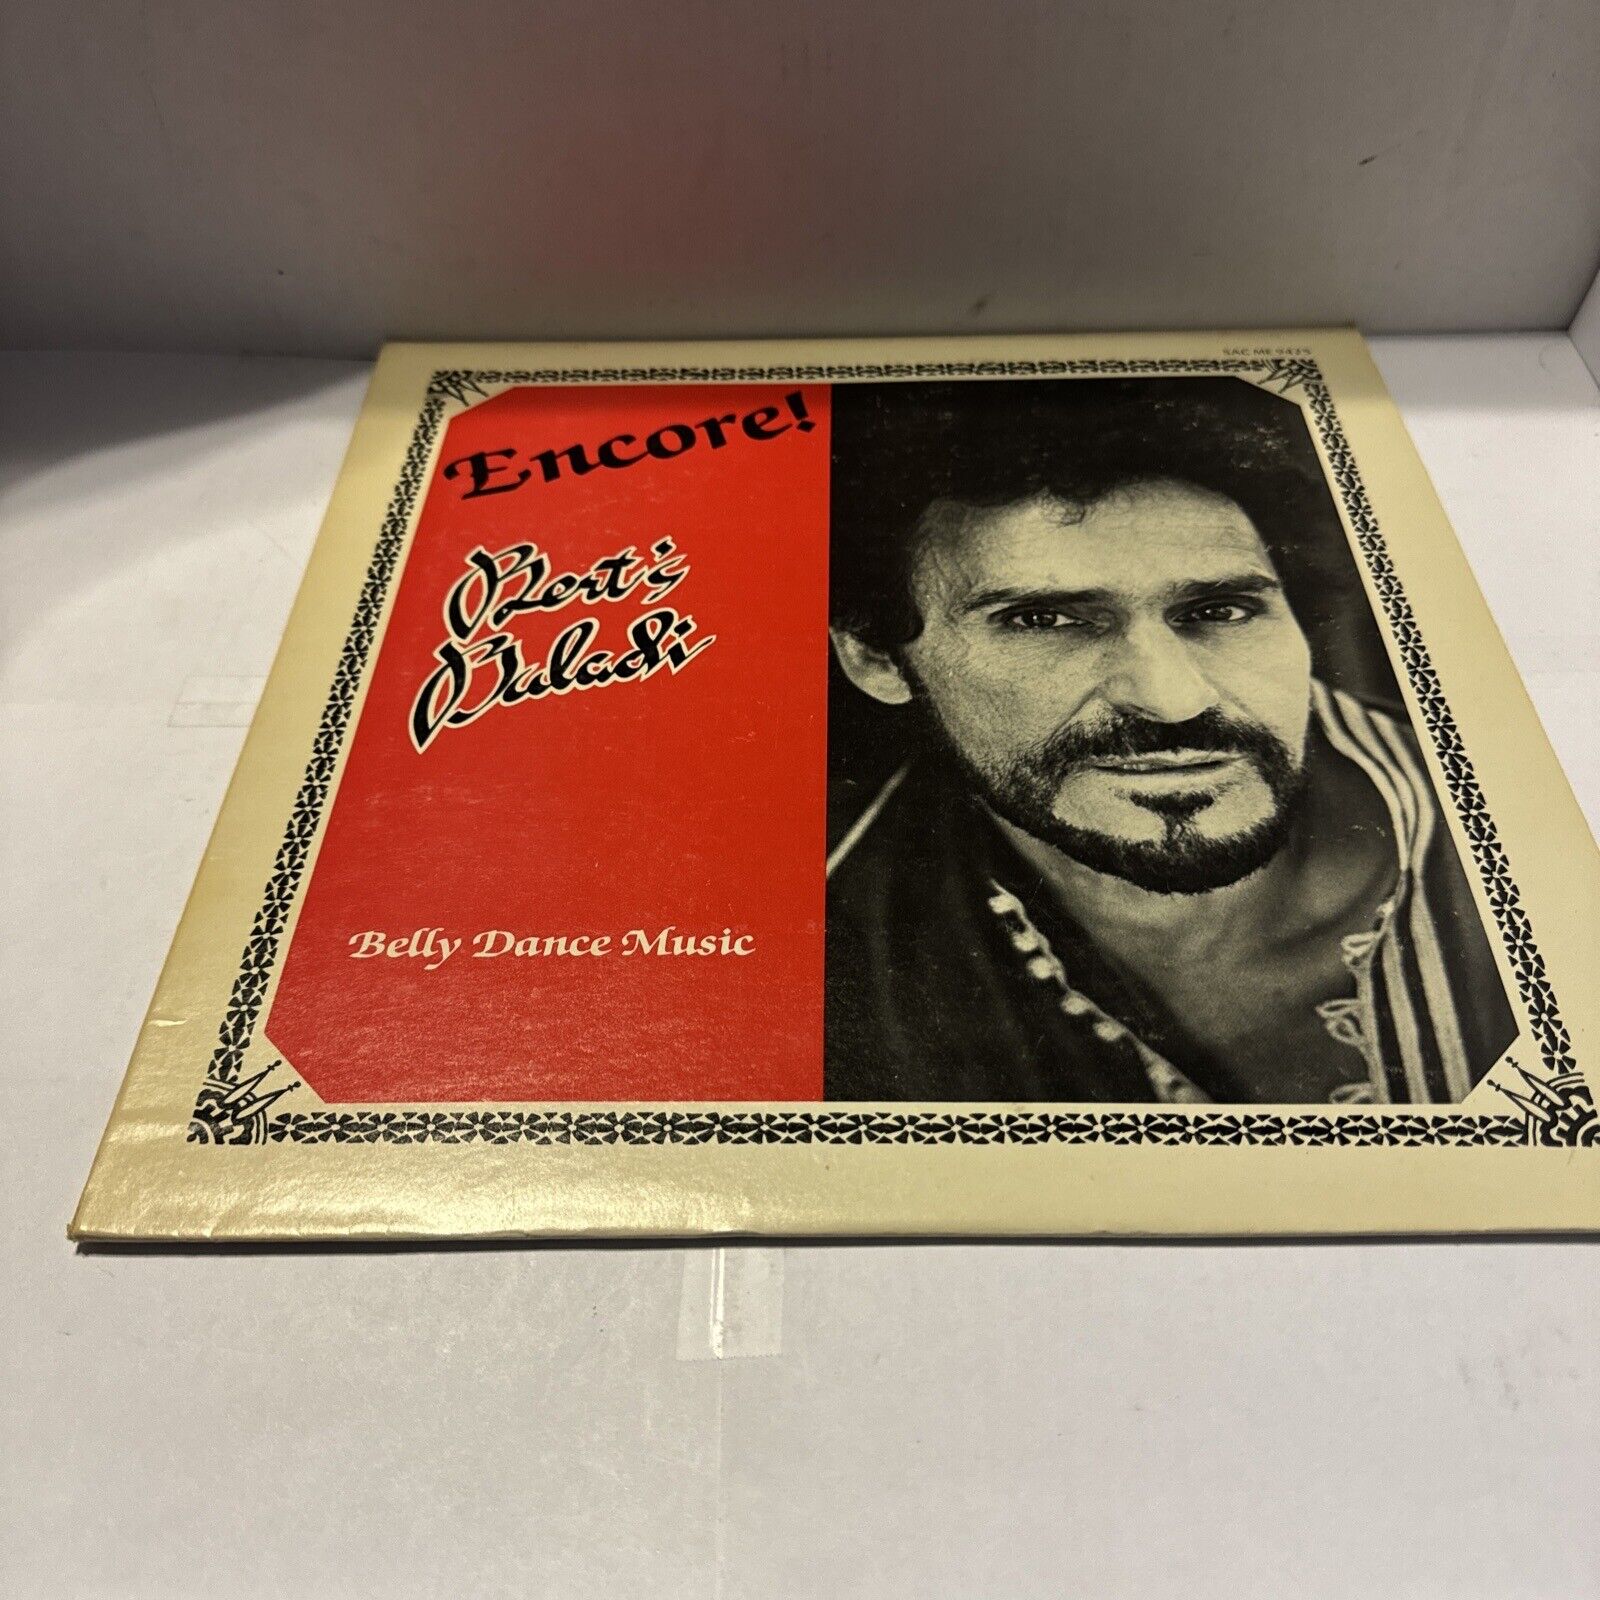 Roman "Bert" Balladine ♫ Encore! Bert's Baladi Belly Dance Music ♫ 1979 Vinyl LP